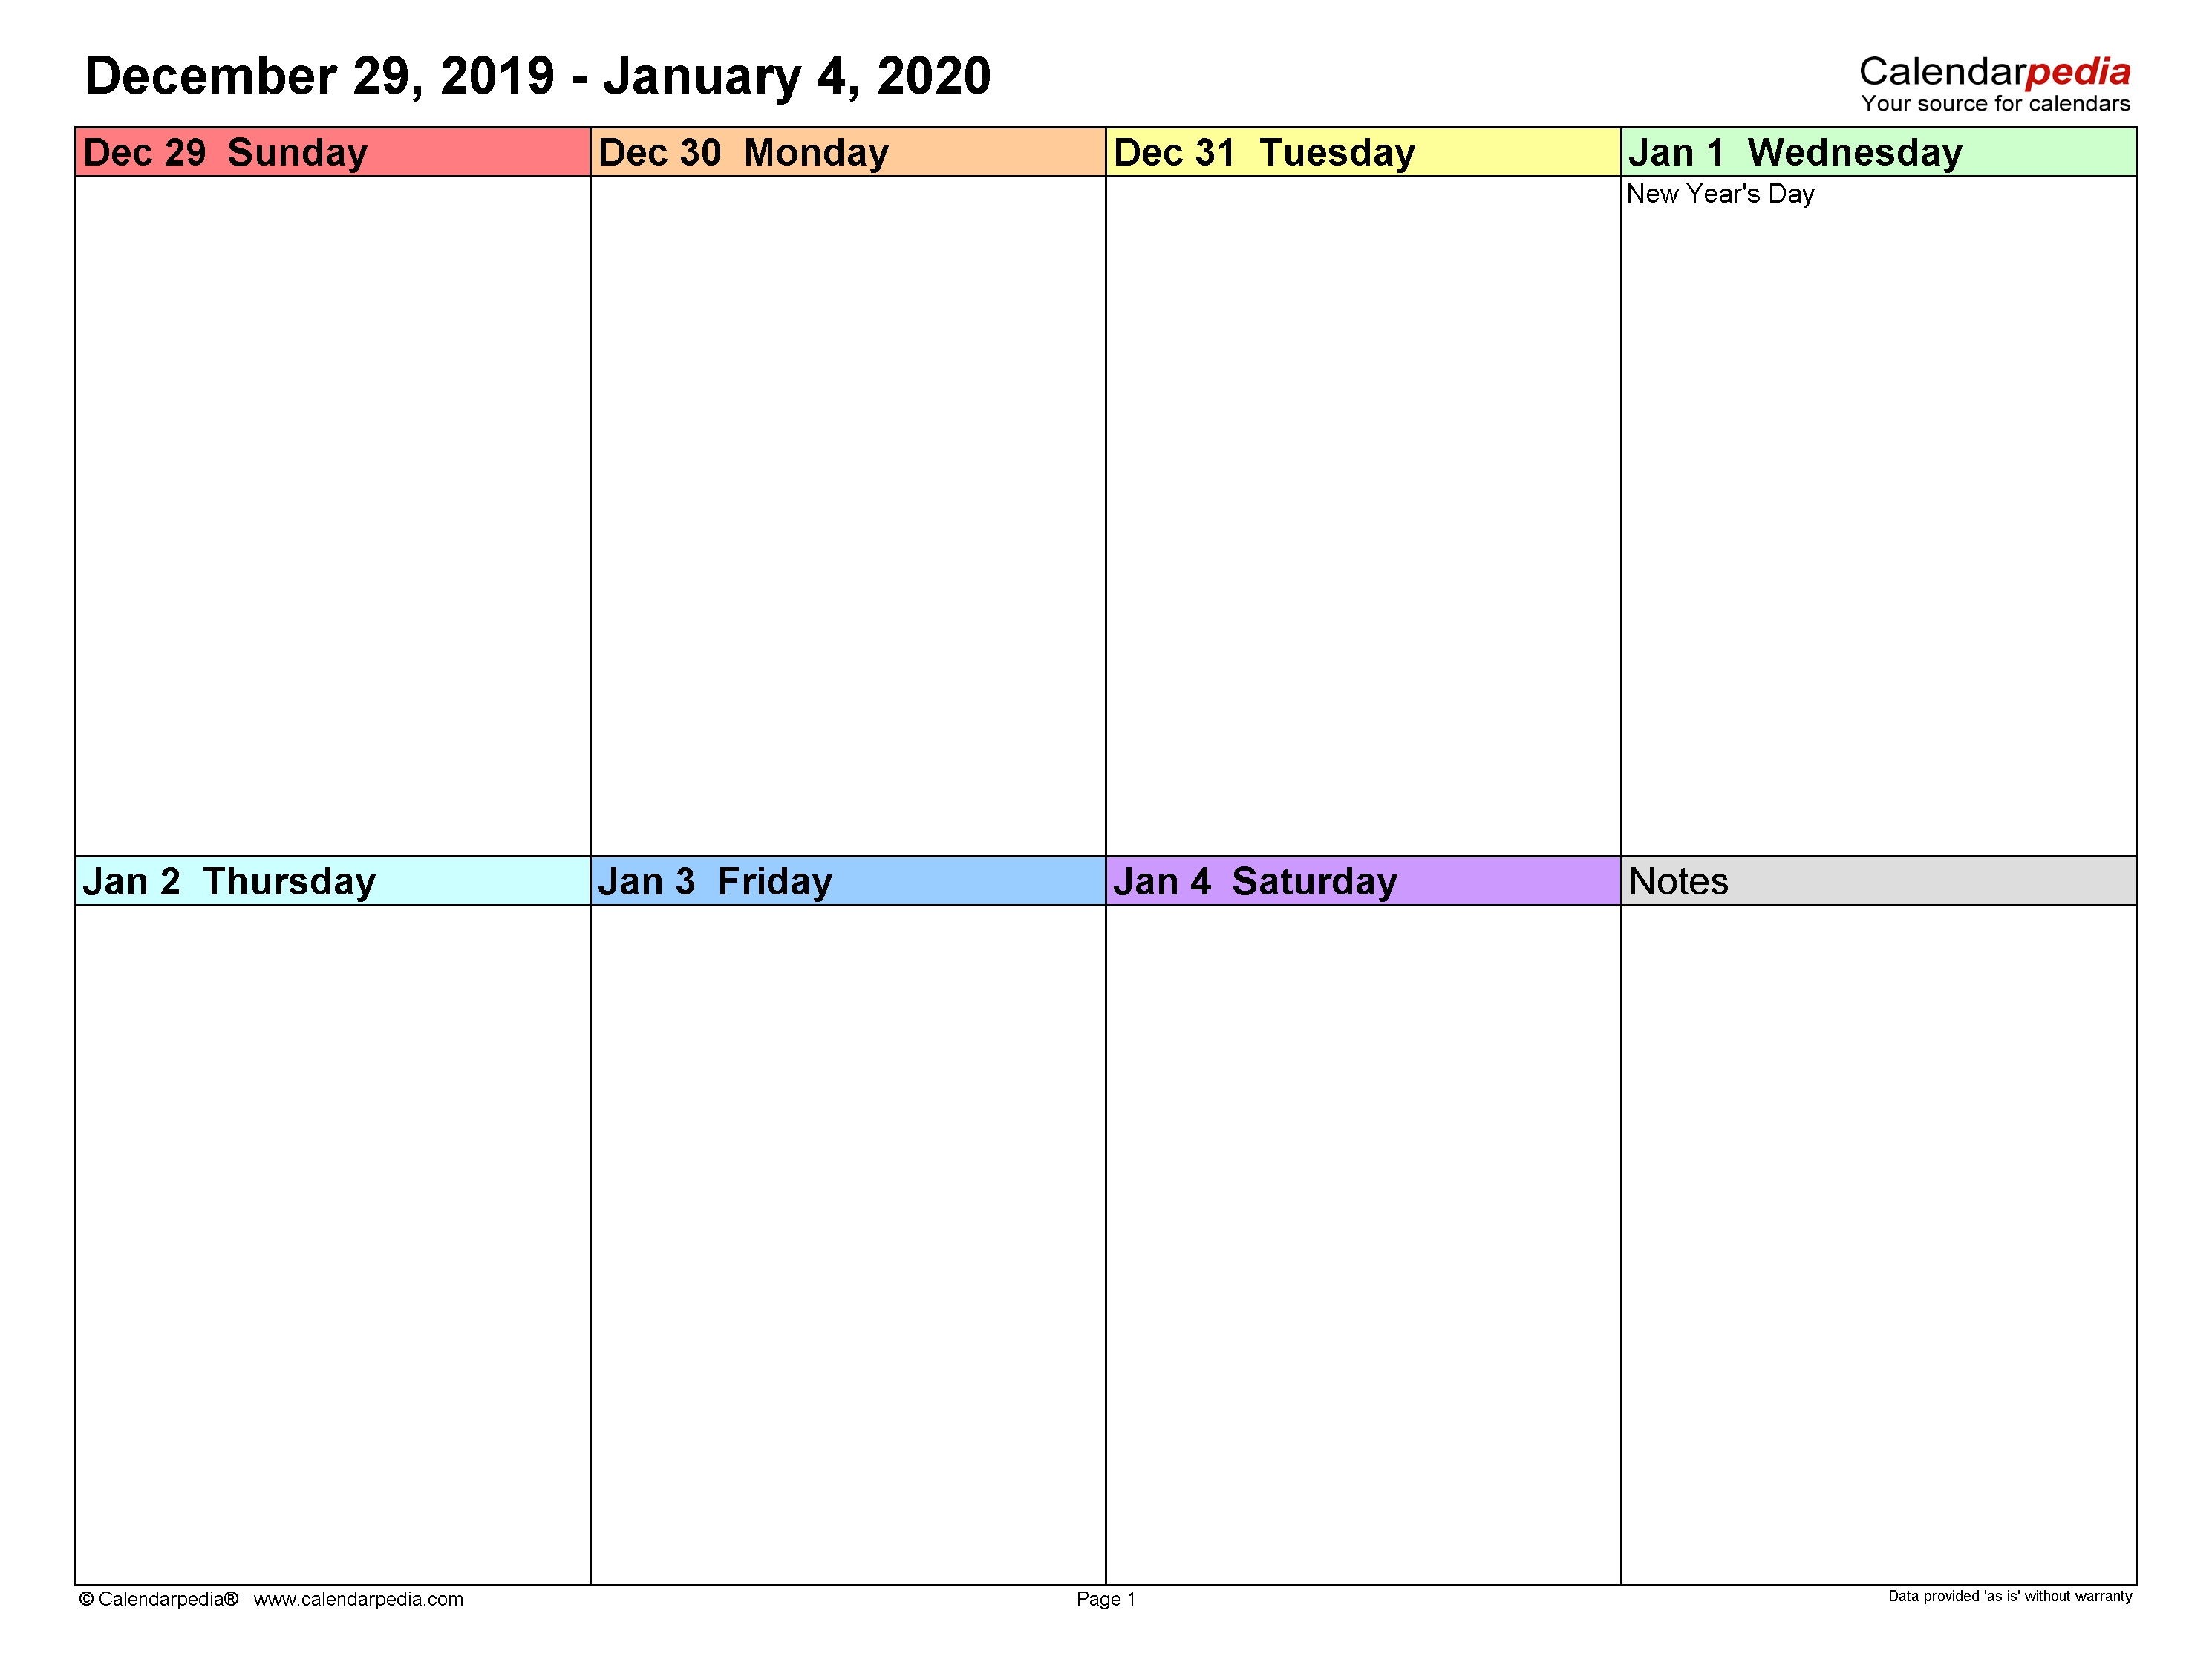 Weekly Calendars 2020 For Word - 12 Free Printable Templates Calendar Template Week View